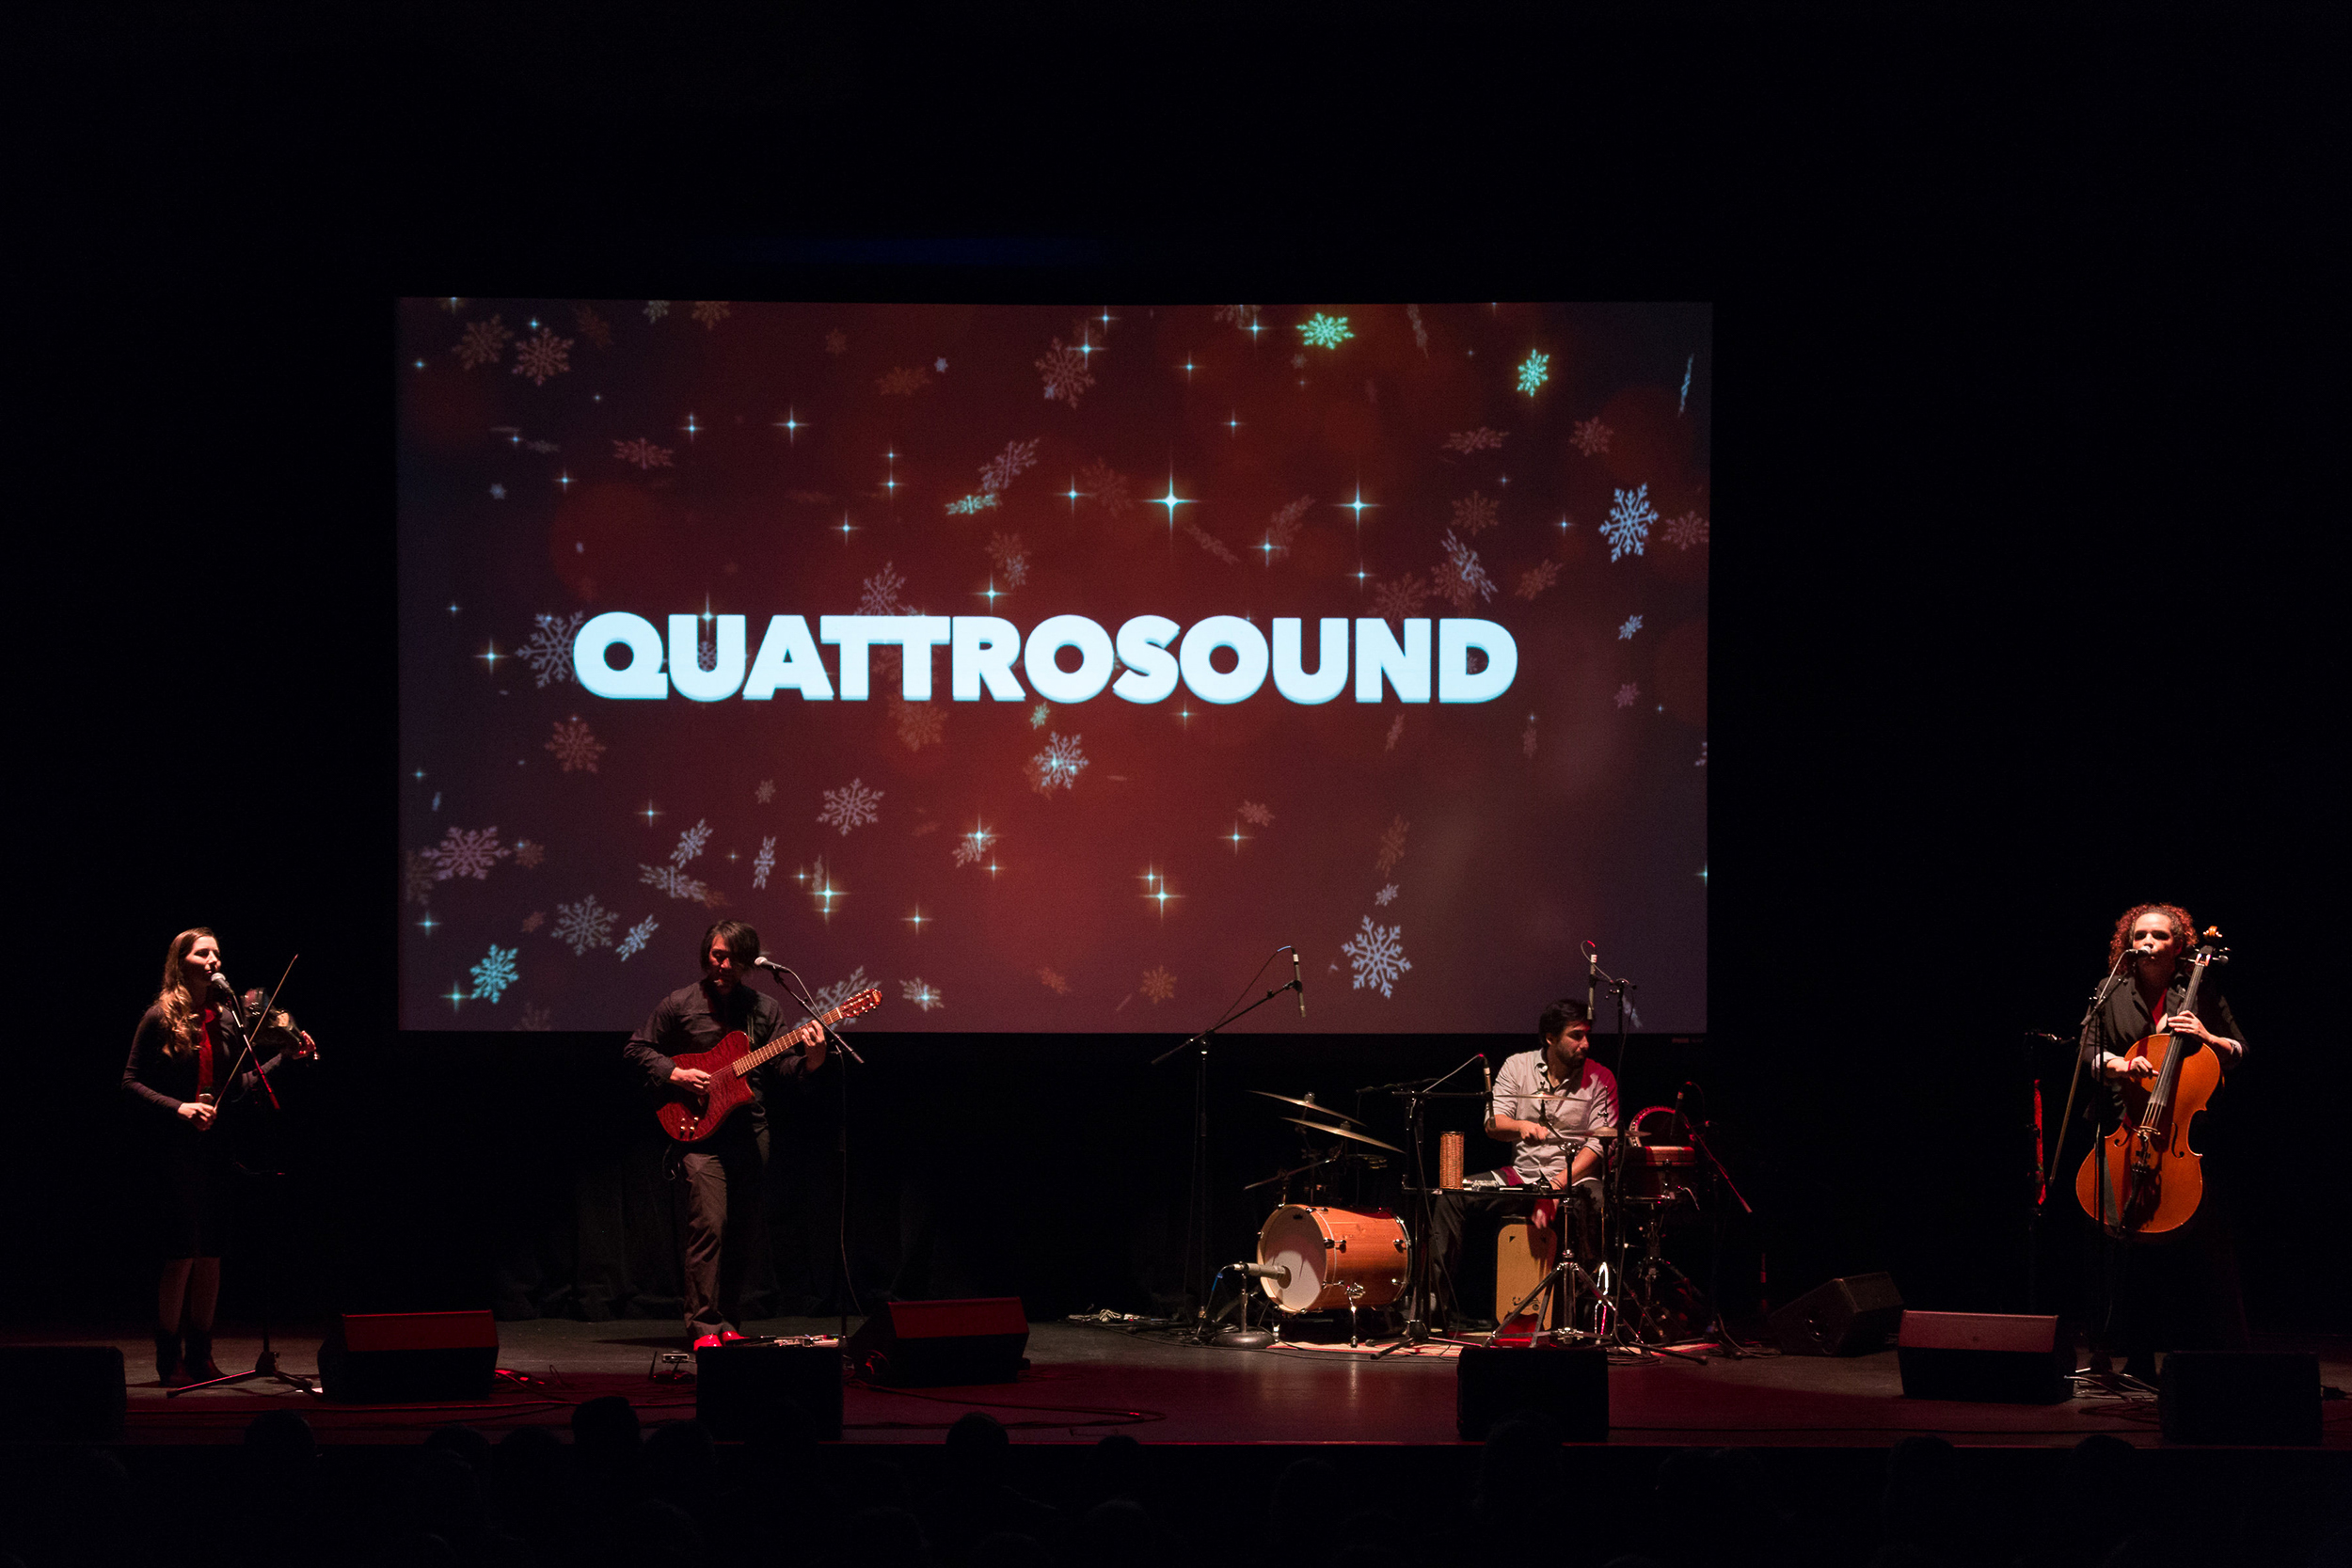   Quattrosound: A Holiday Show.  Presented by The California Center for the Arts, Escondido. 